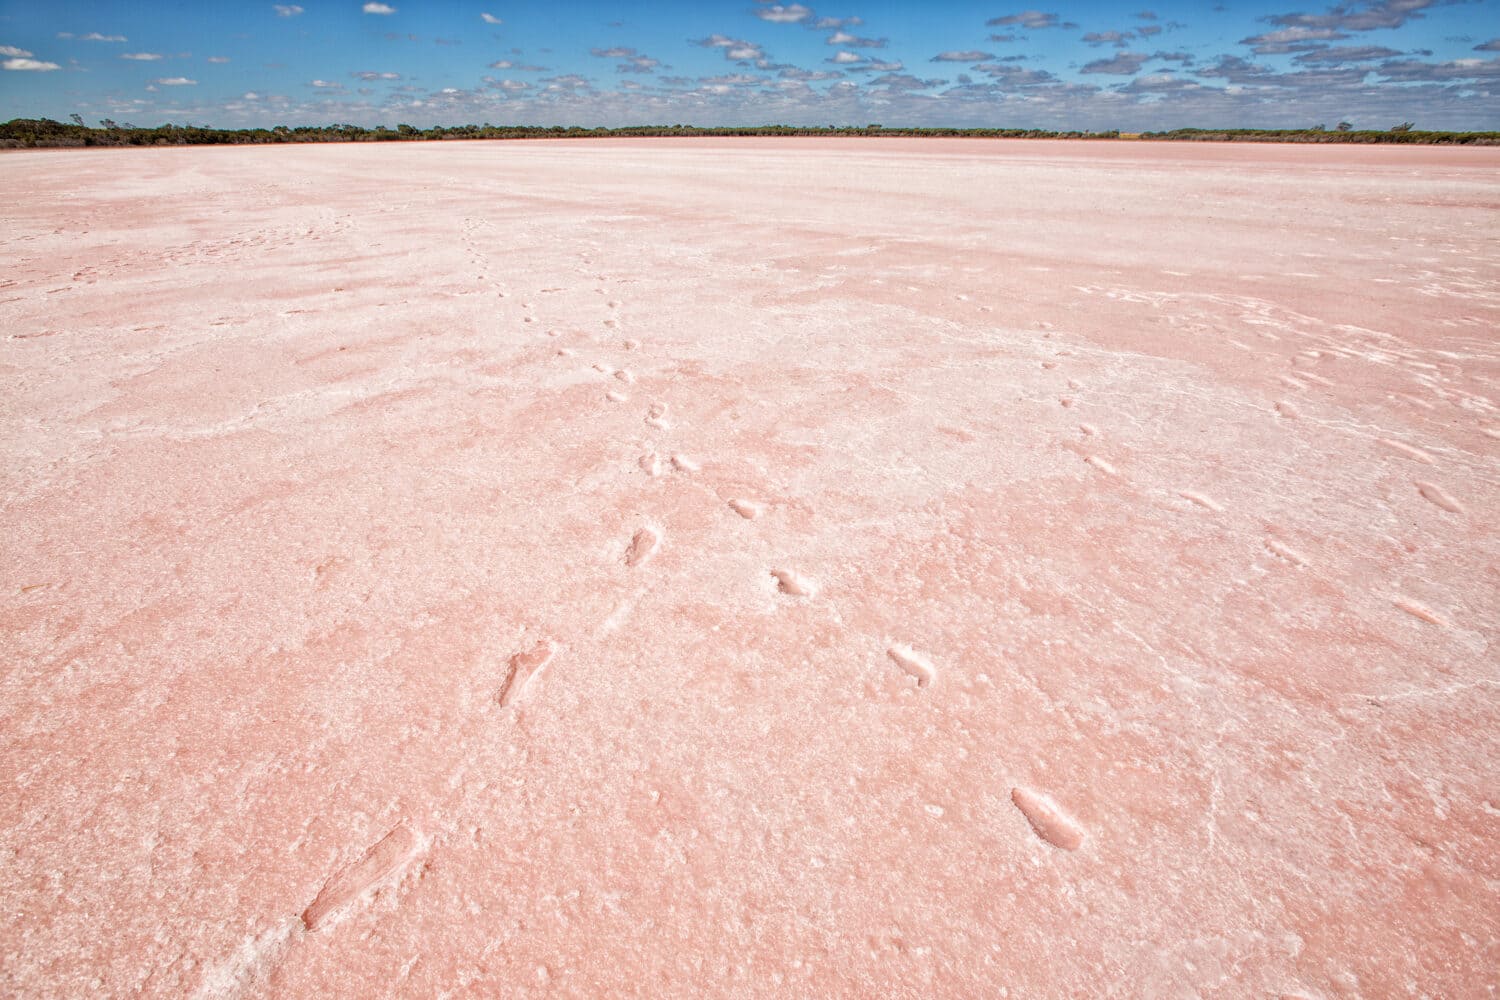 Pink salt lake, Murray-Sunset National Park, Victoria, Australia, as result of pink algae